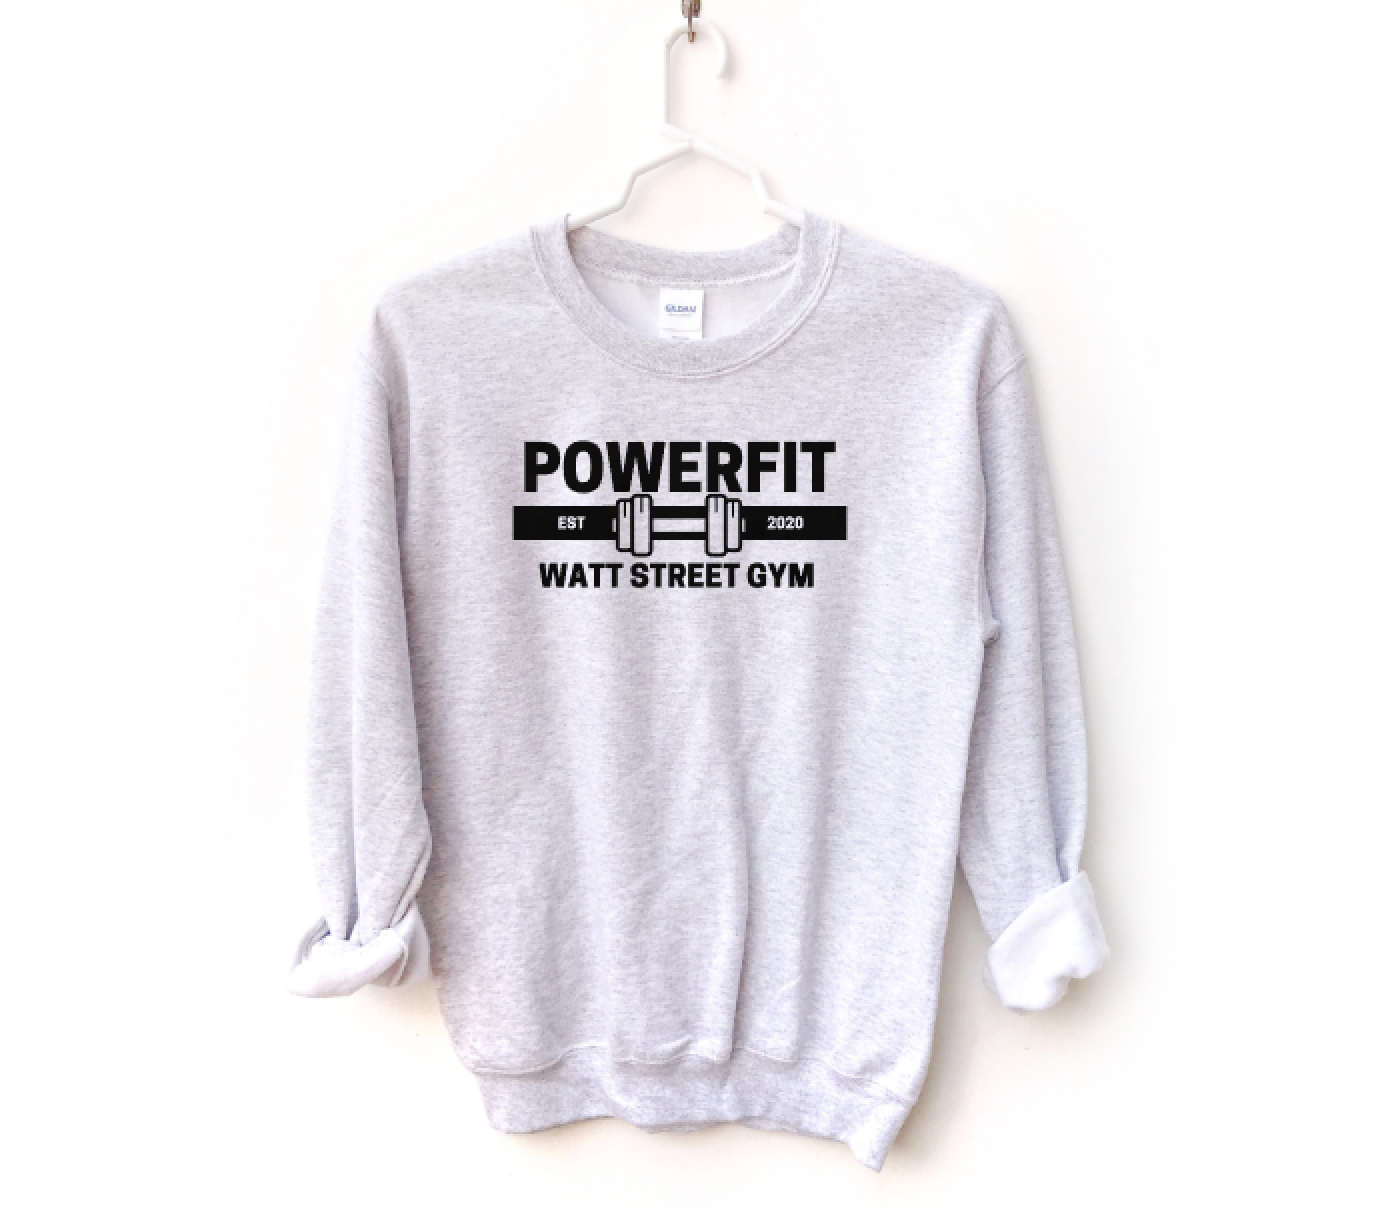 Powerfit Crewneck Sweatshirt